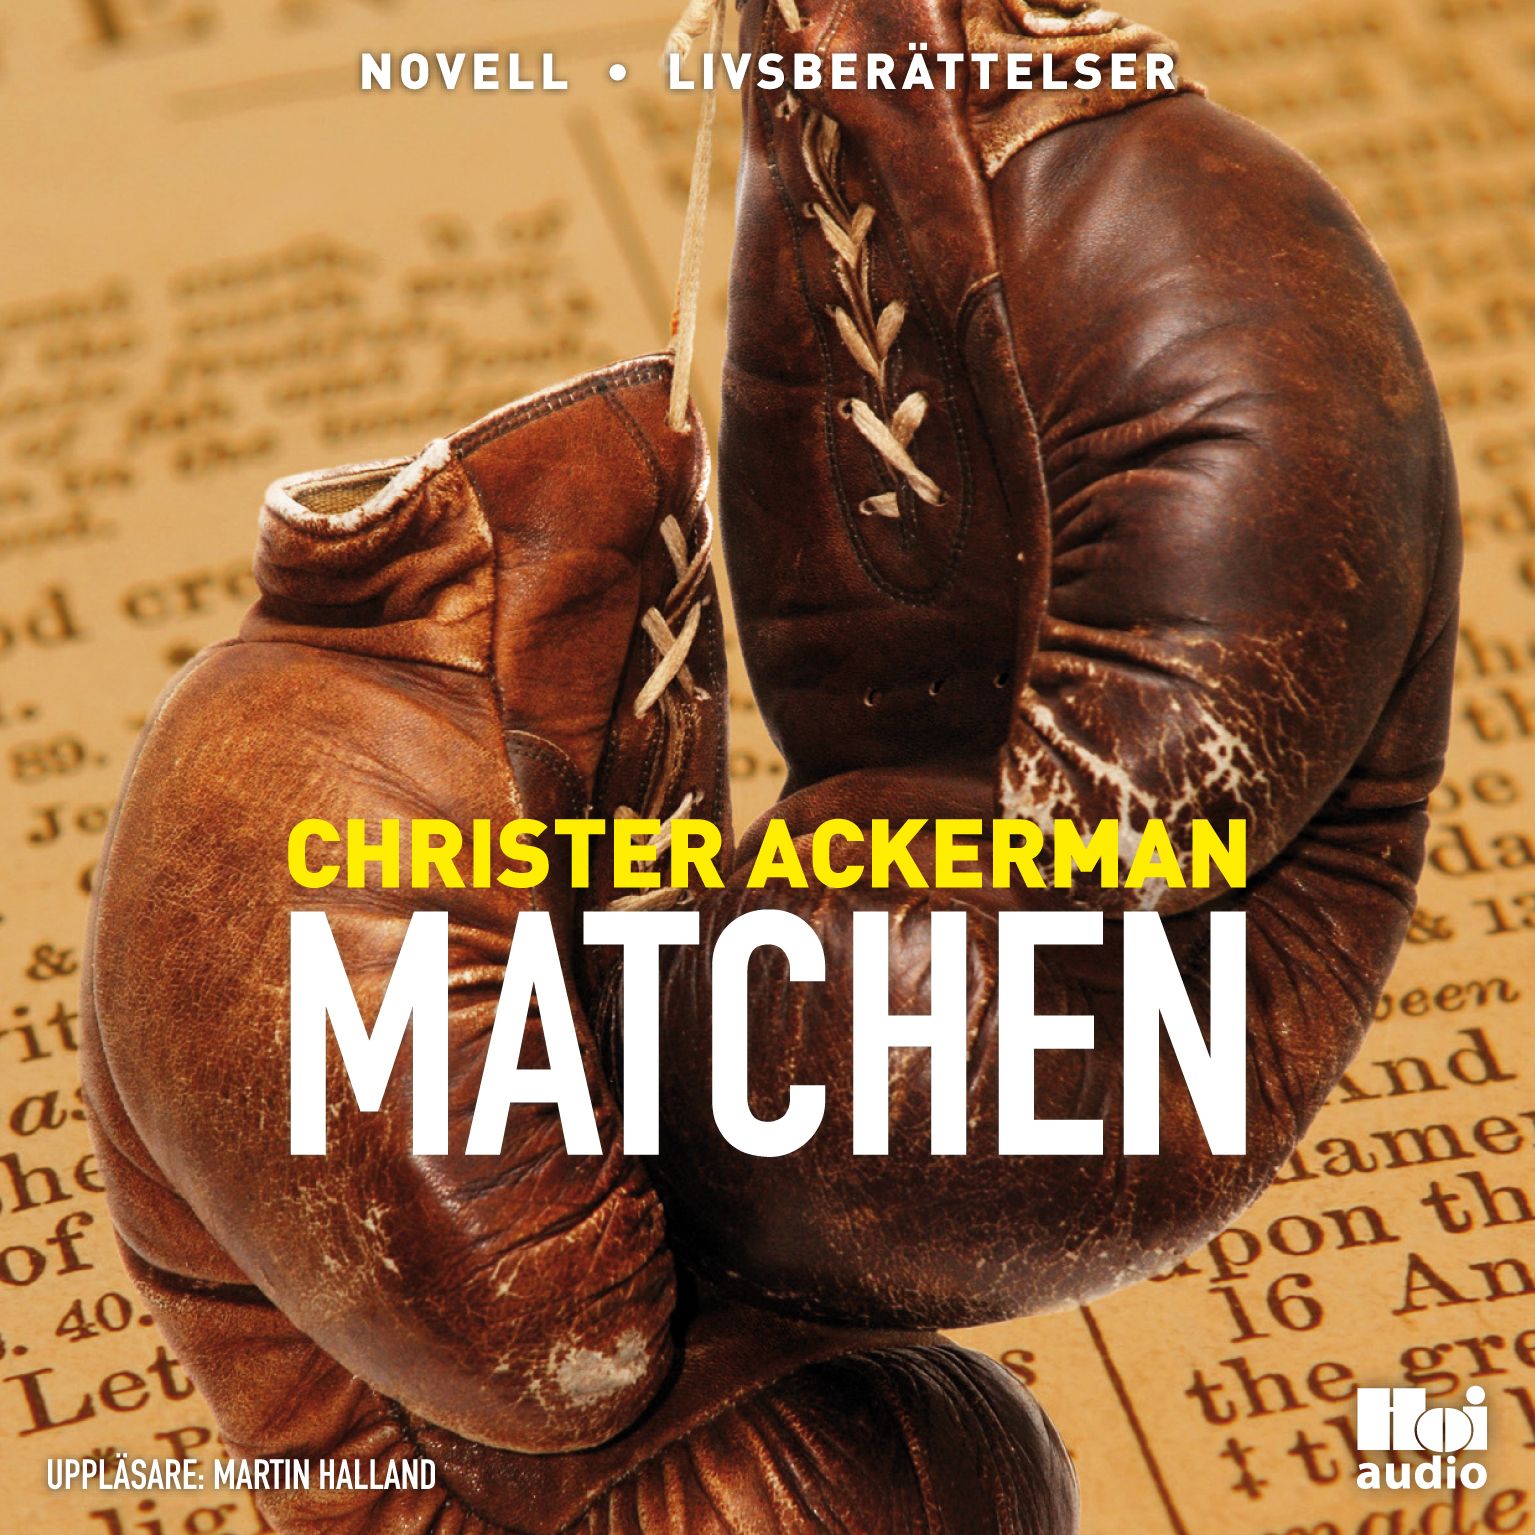 Matchen, audiobook by Christer Ackerman